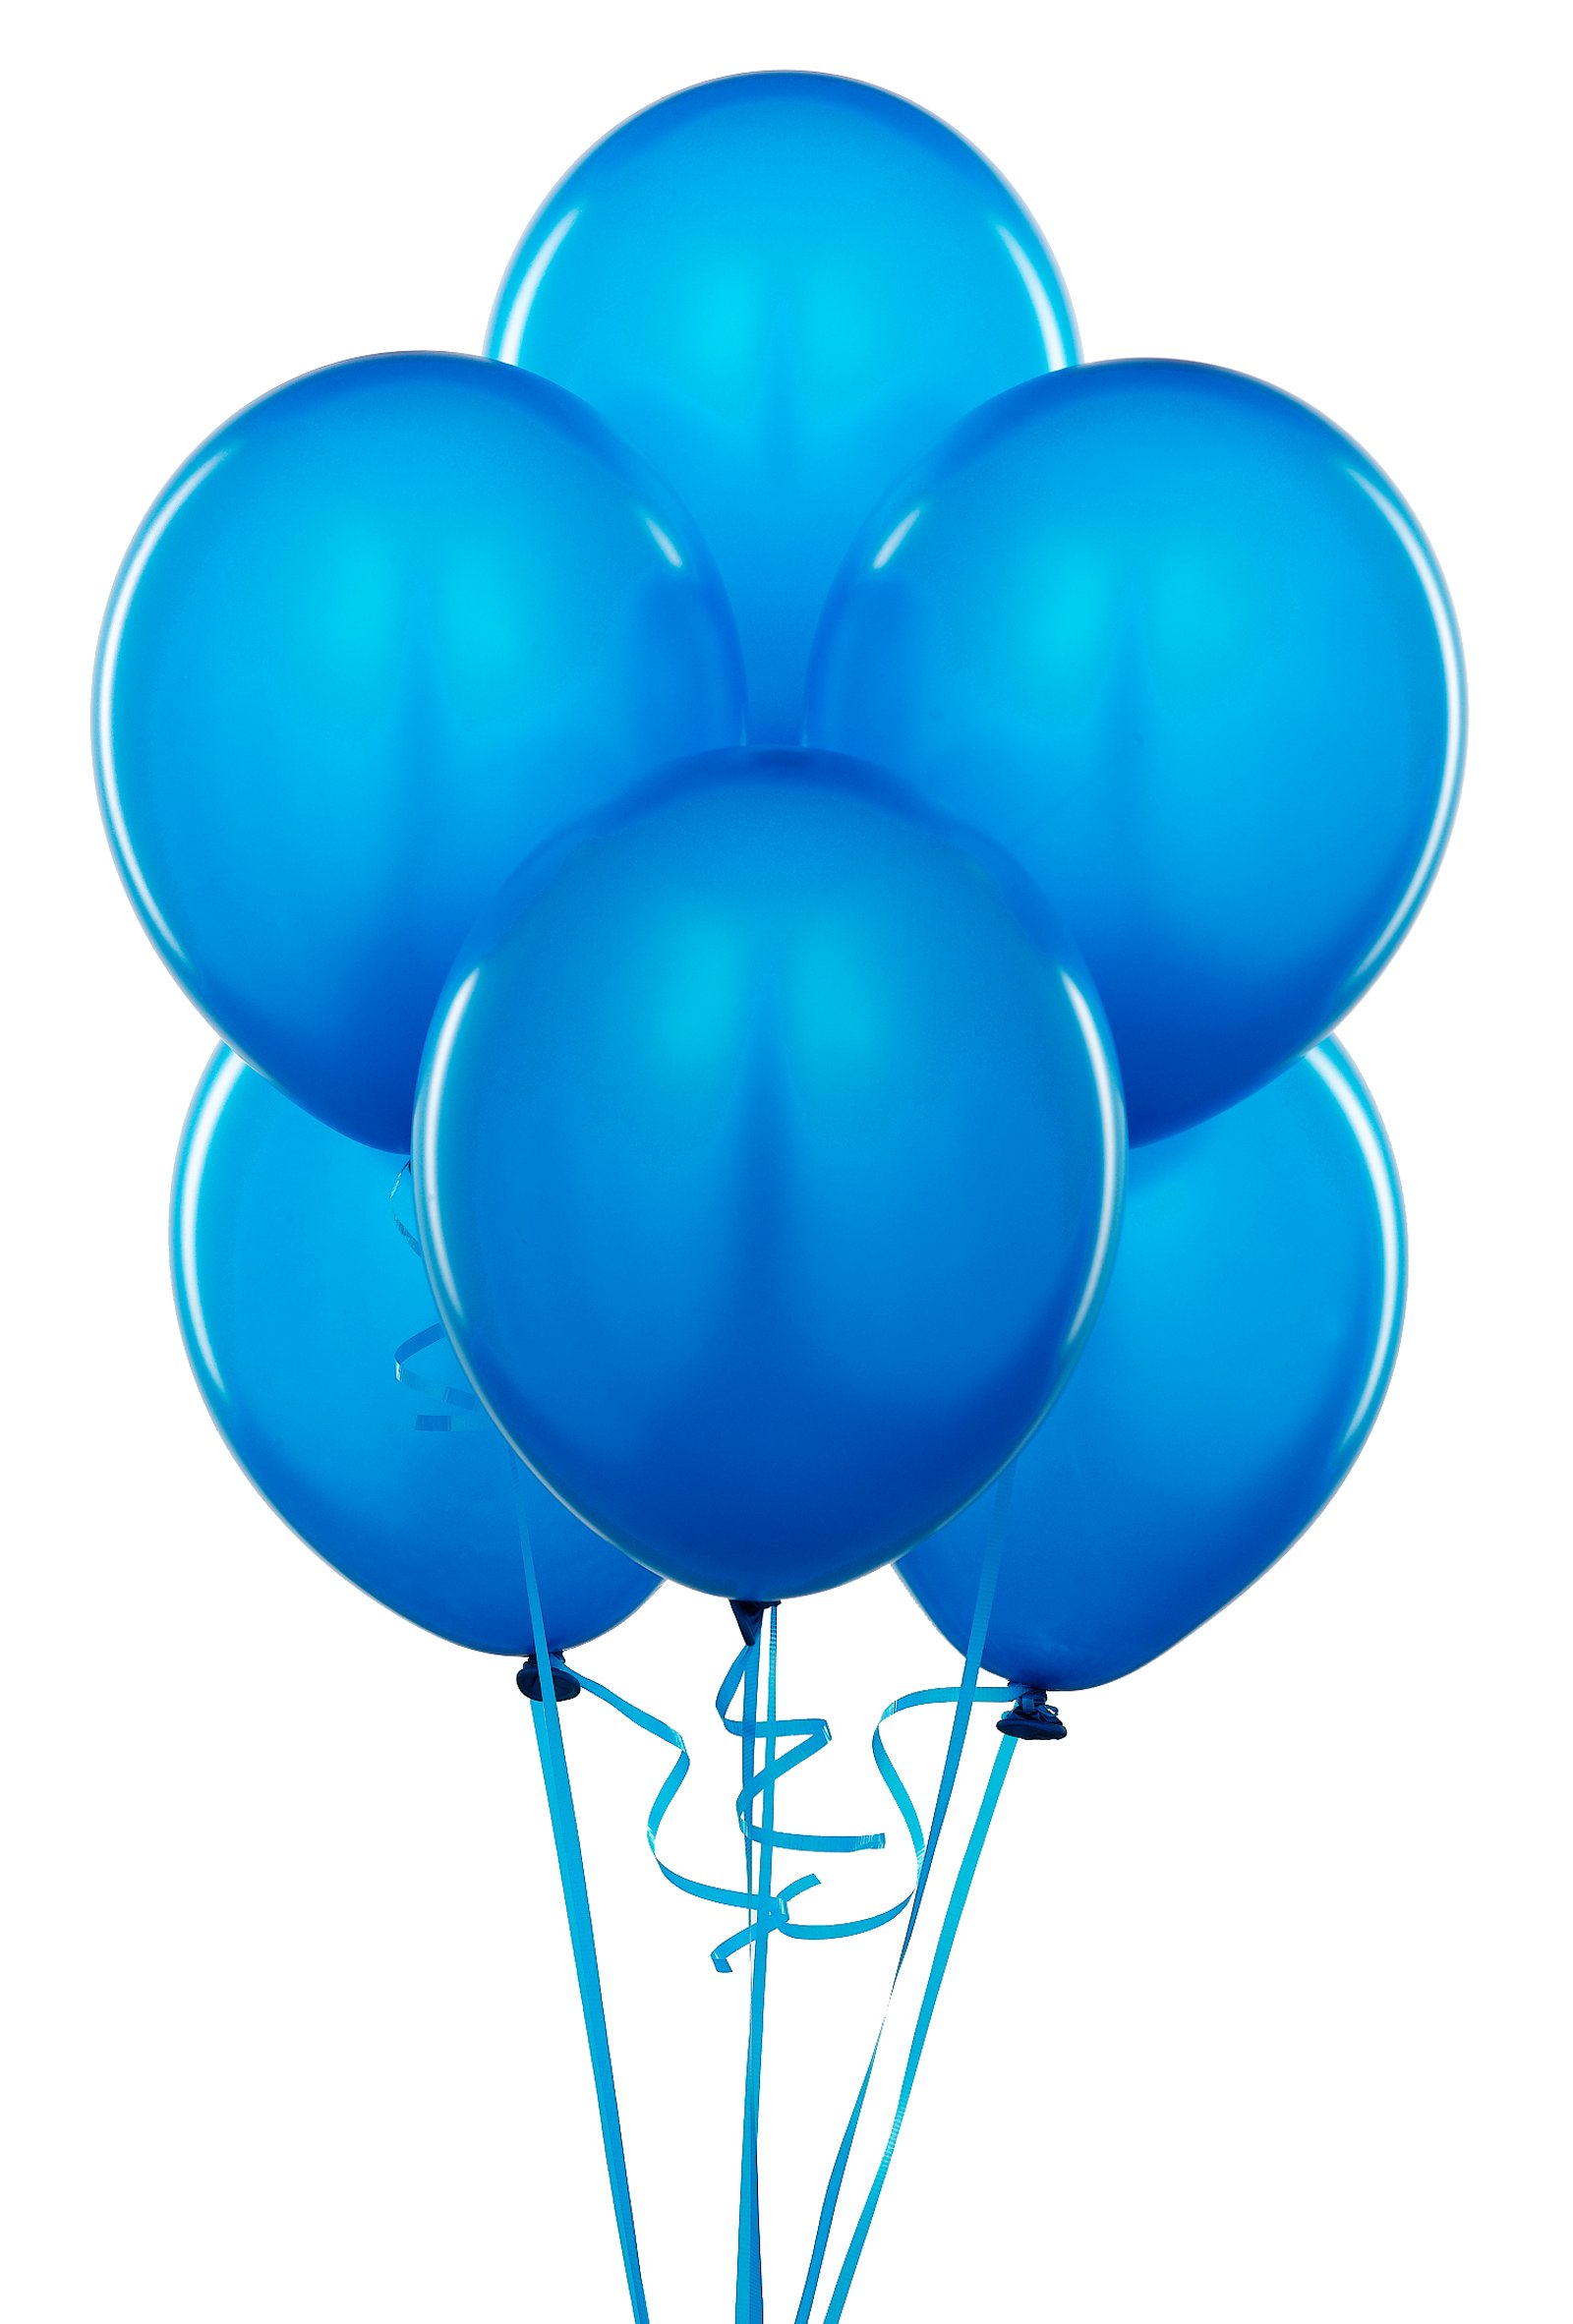 balloons jpg clipart - photo #50